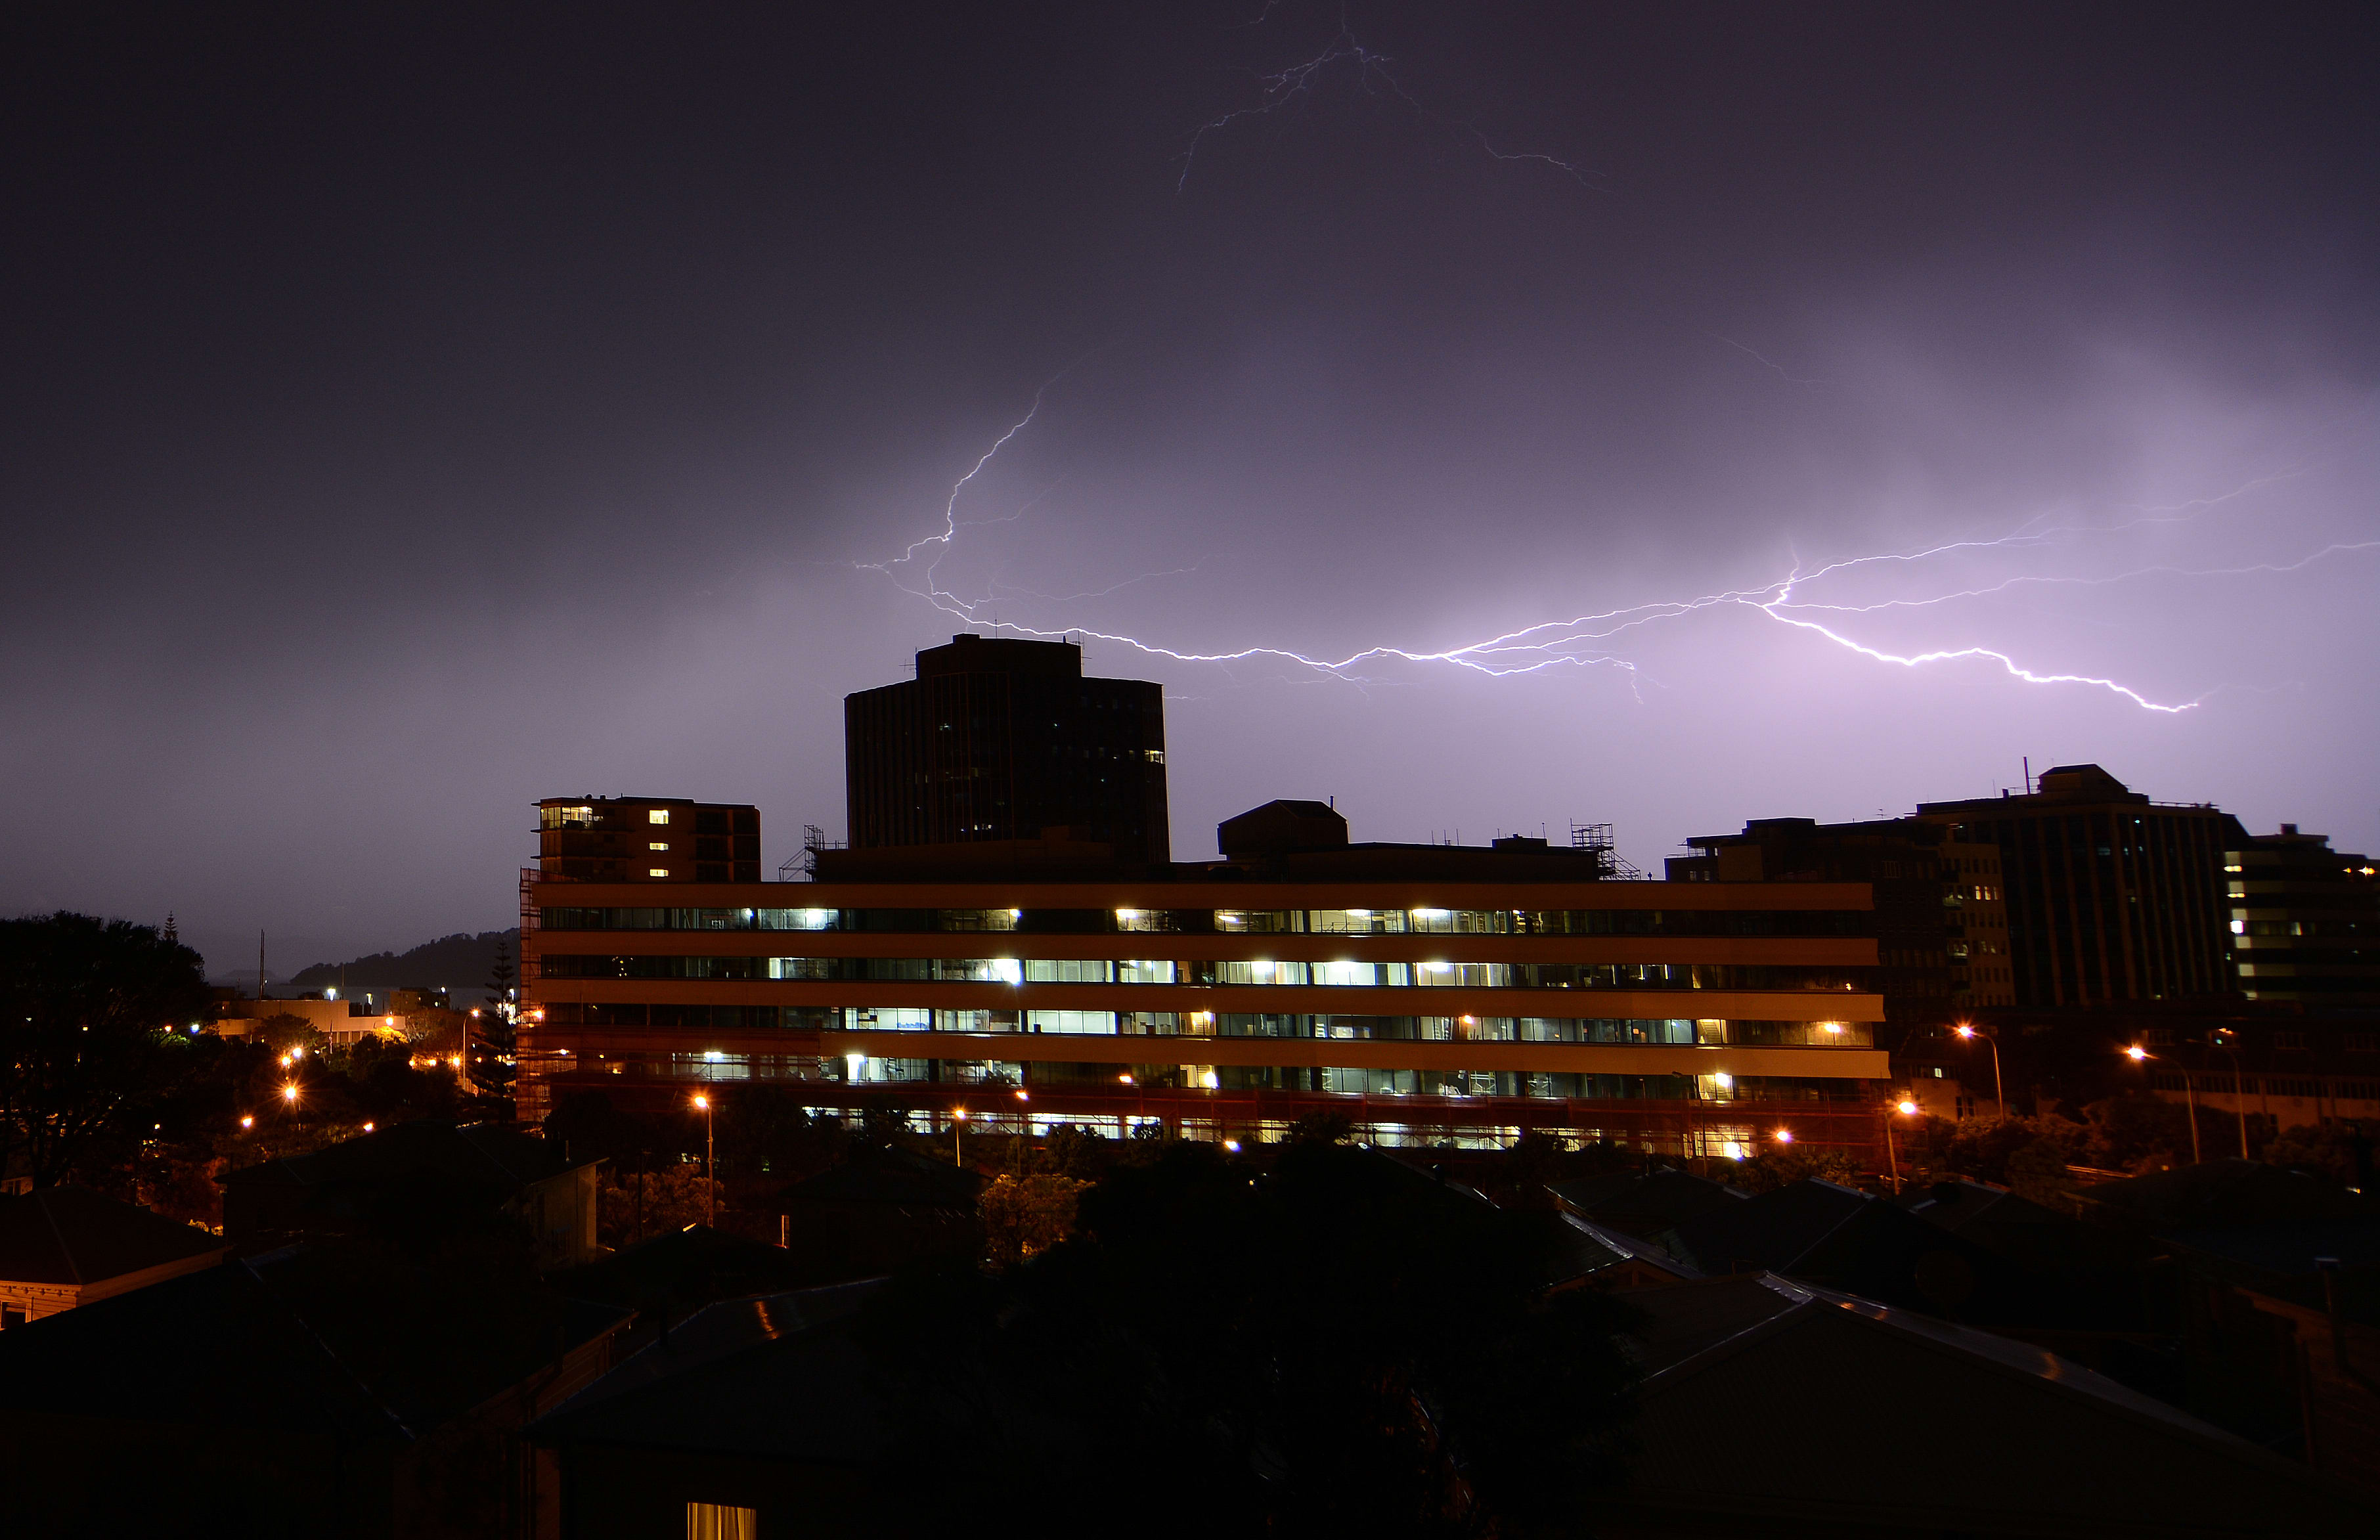 Lightning flash over a multi-storey building in Molesworth St, Wellington.